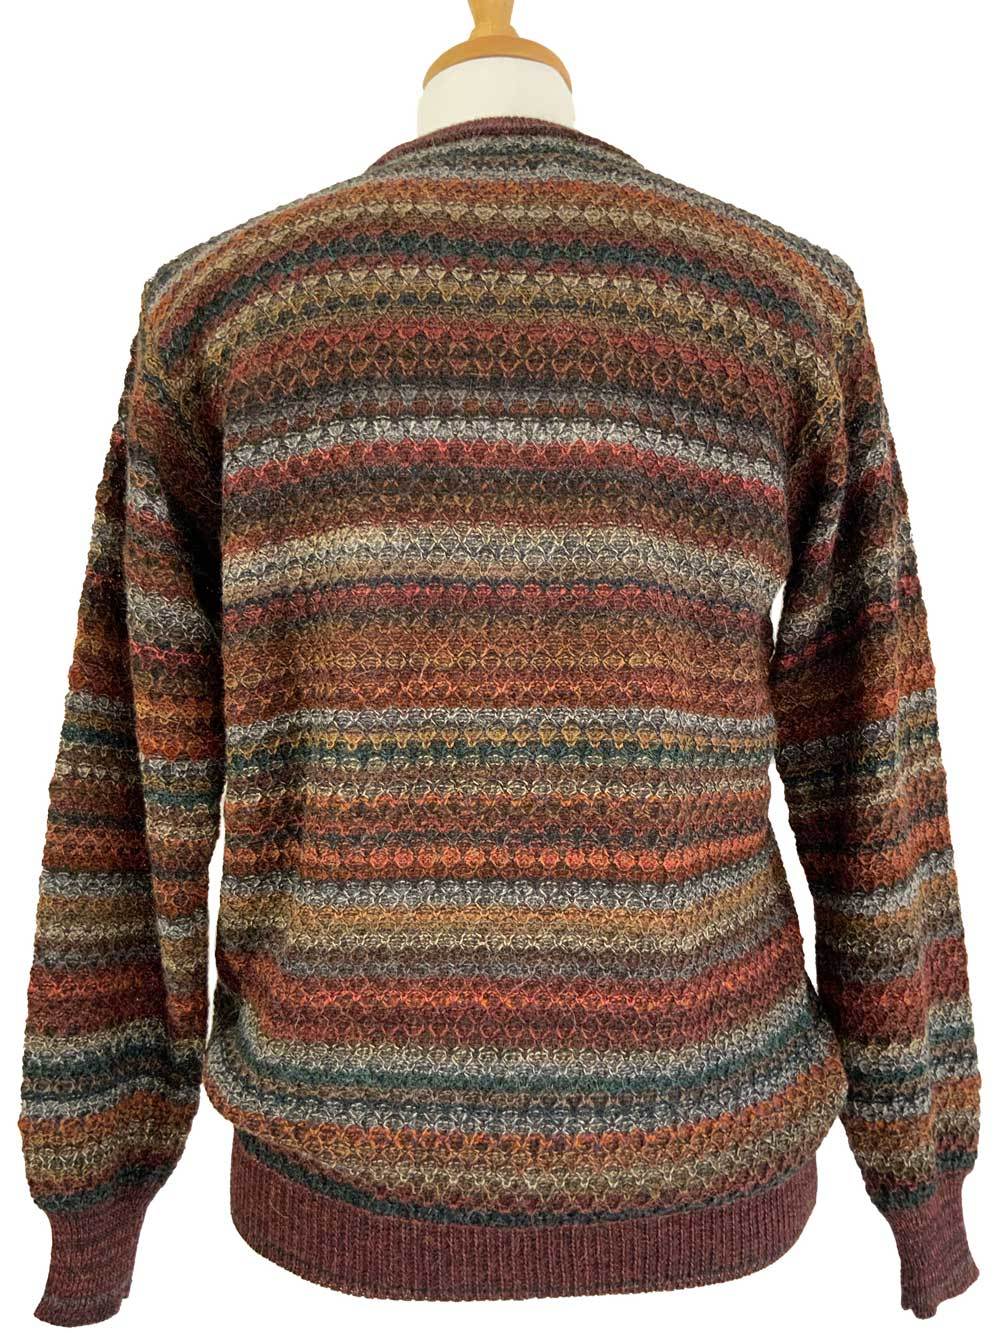 John Crew Neck Sweater - Rust - 2